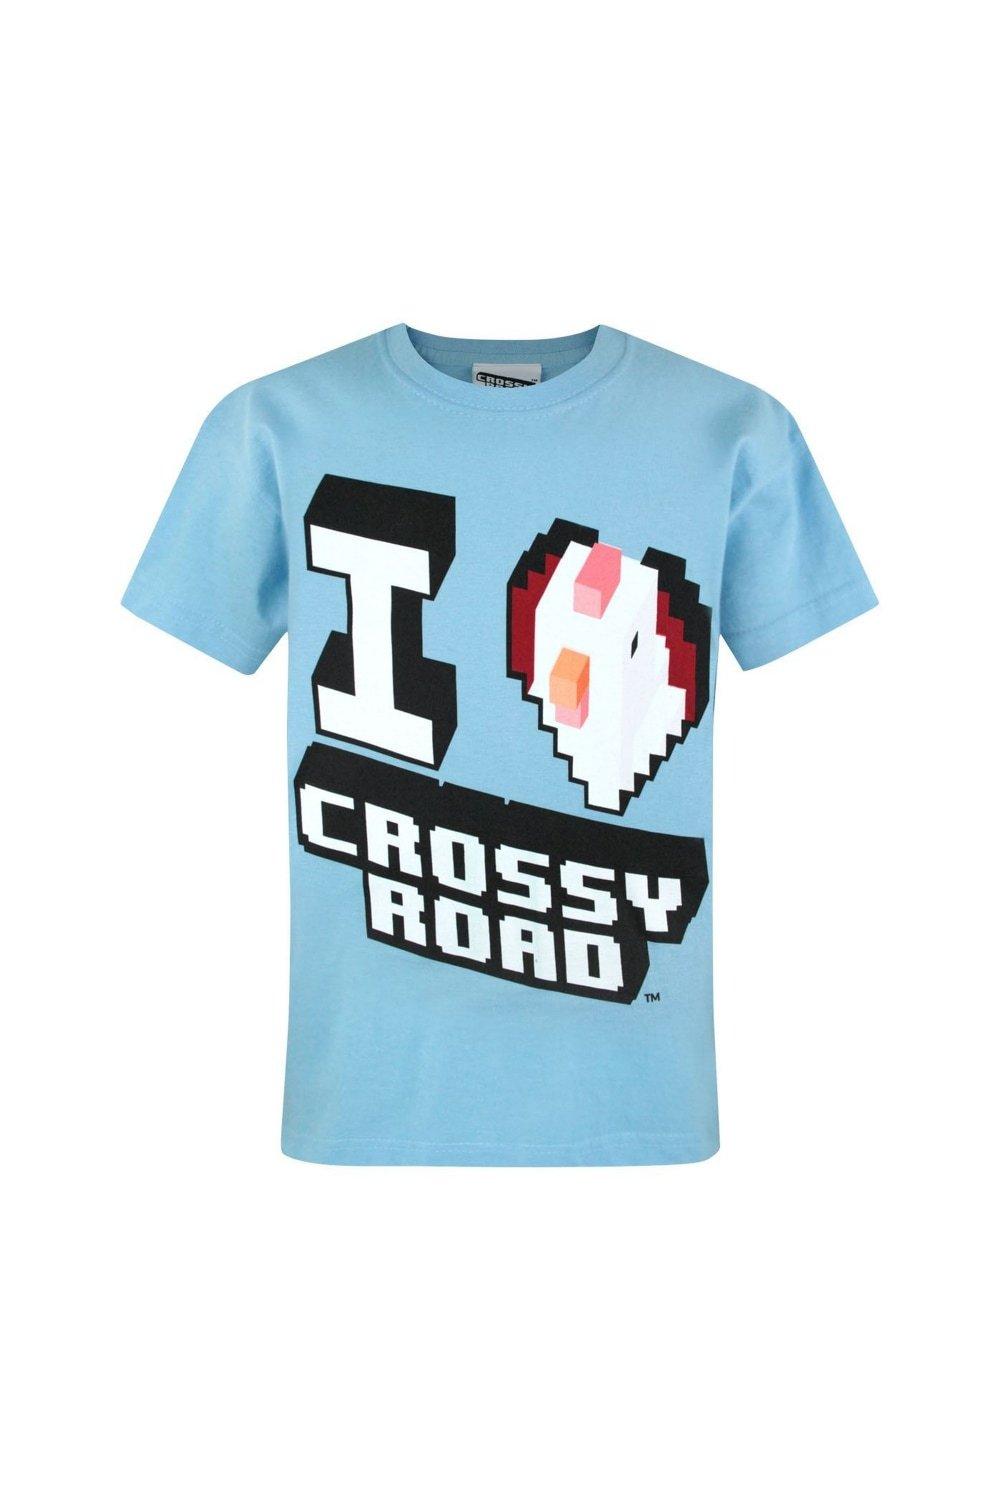 Crossy Road Official I Love Crossy Road Short Sleeved T-Shirt